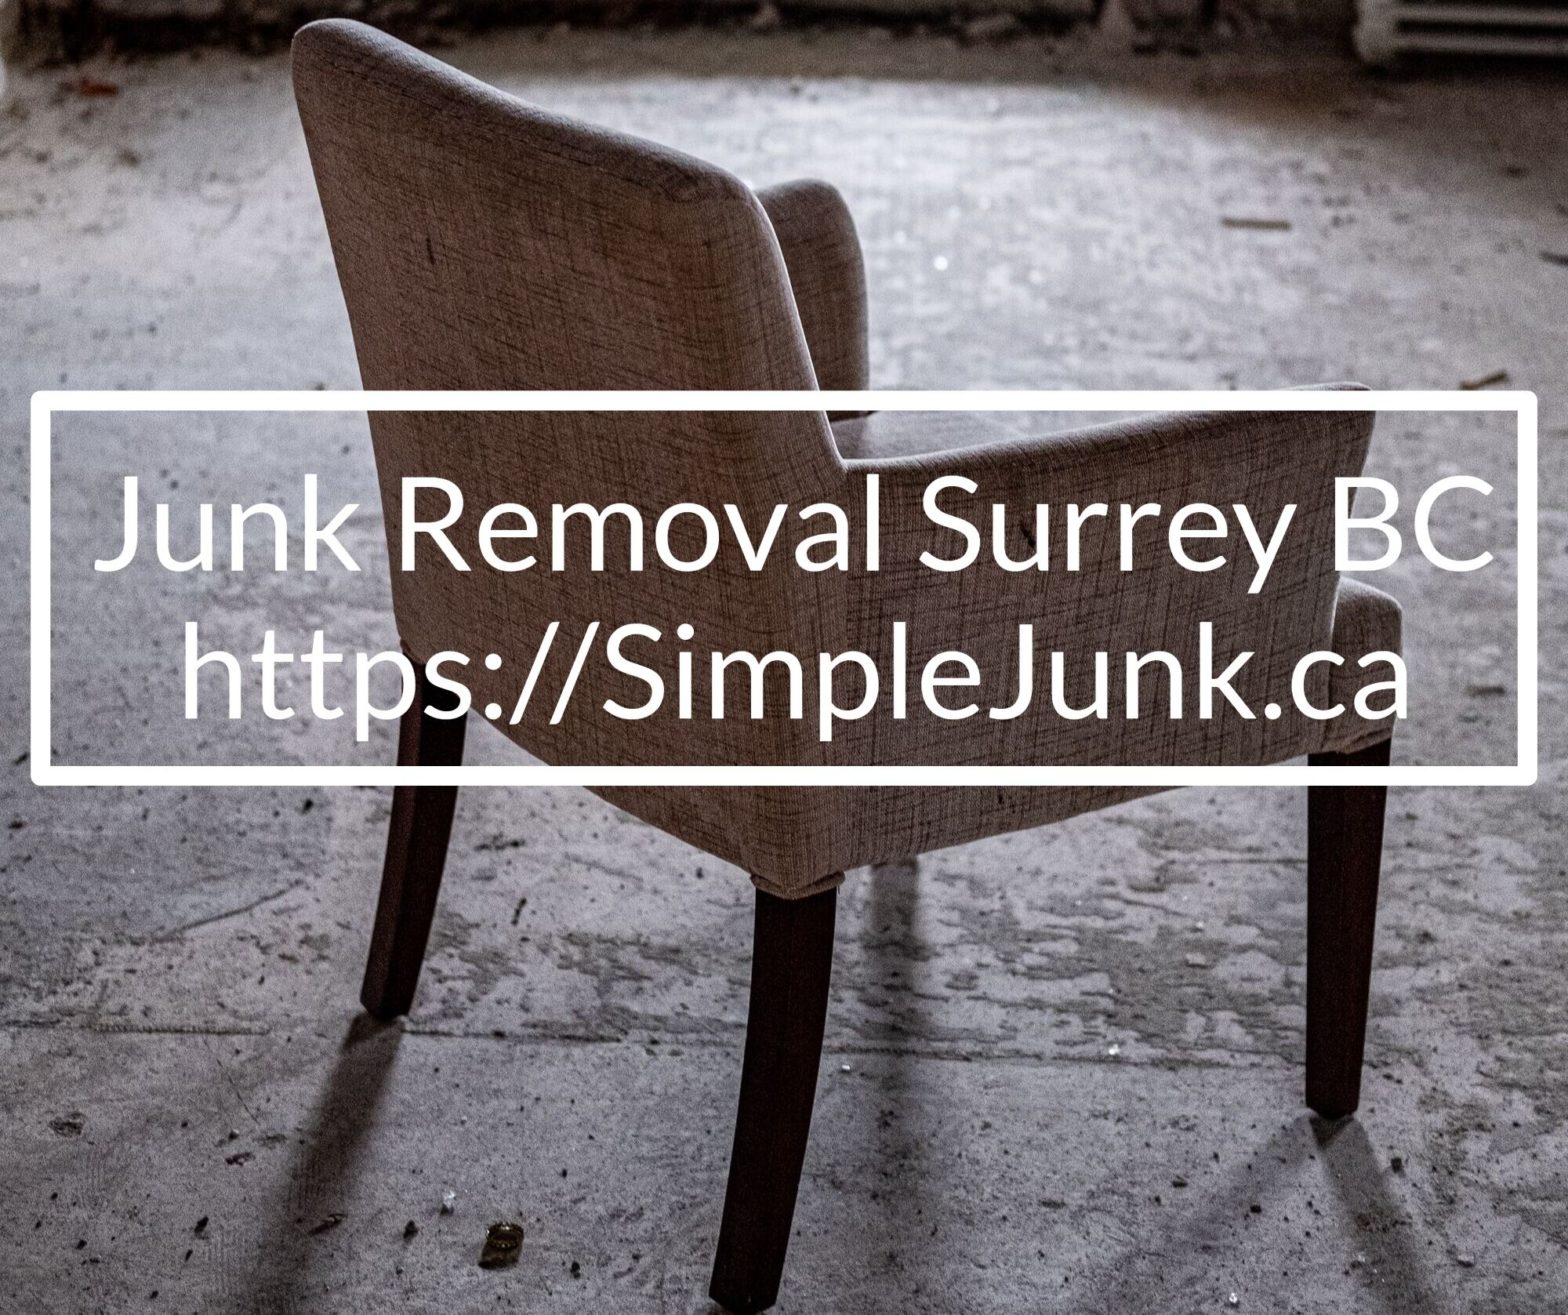 Junk-Removal-Surrey-BC-SimpleJunk.ca_